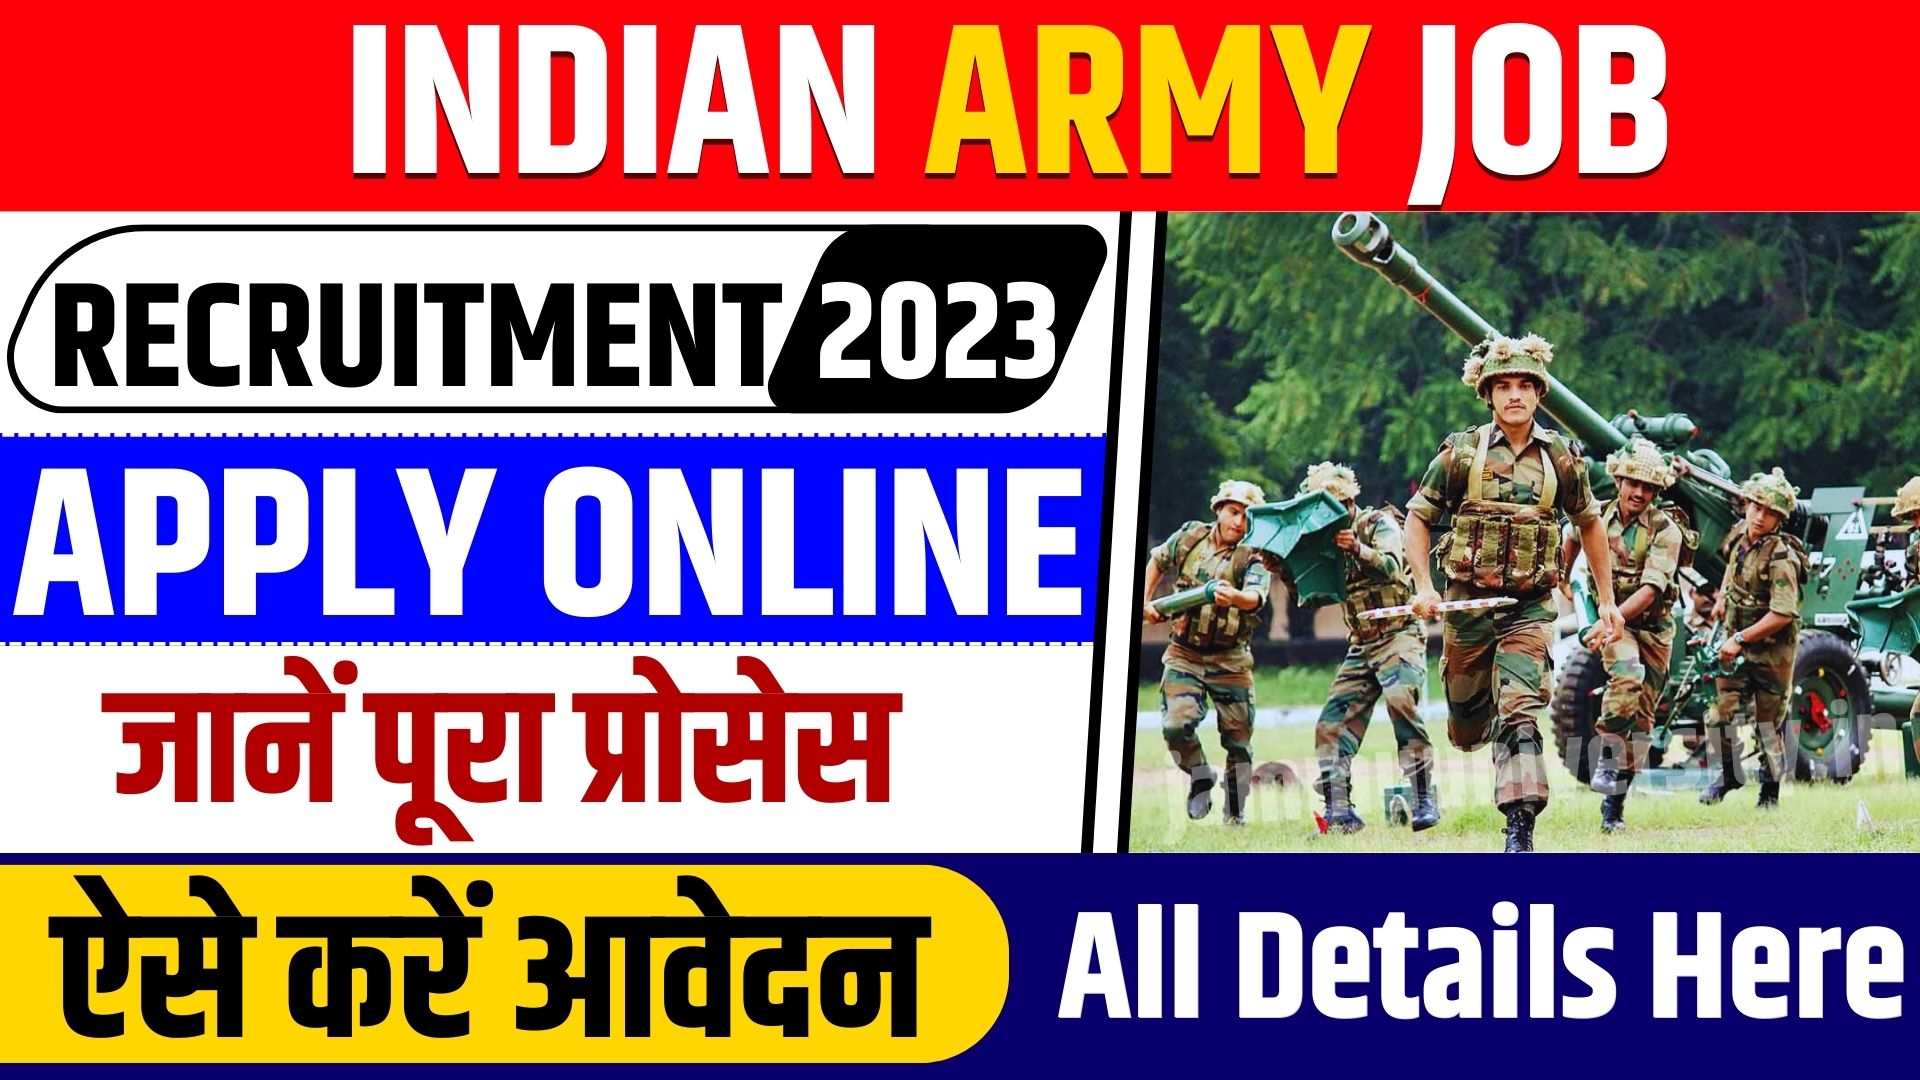 INDIAN ARMY JOB